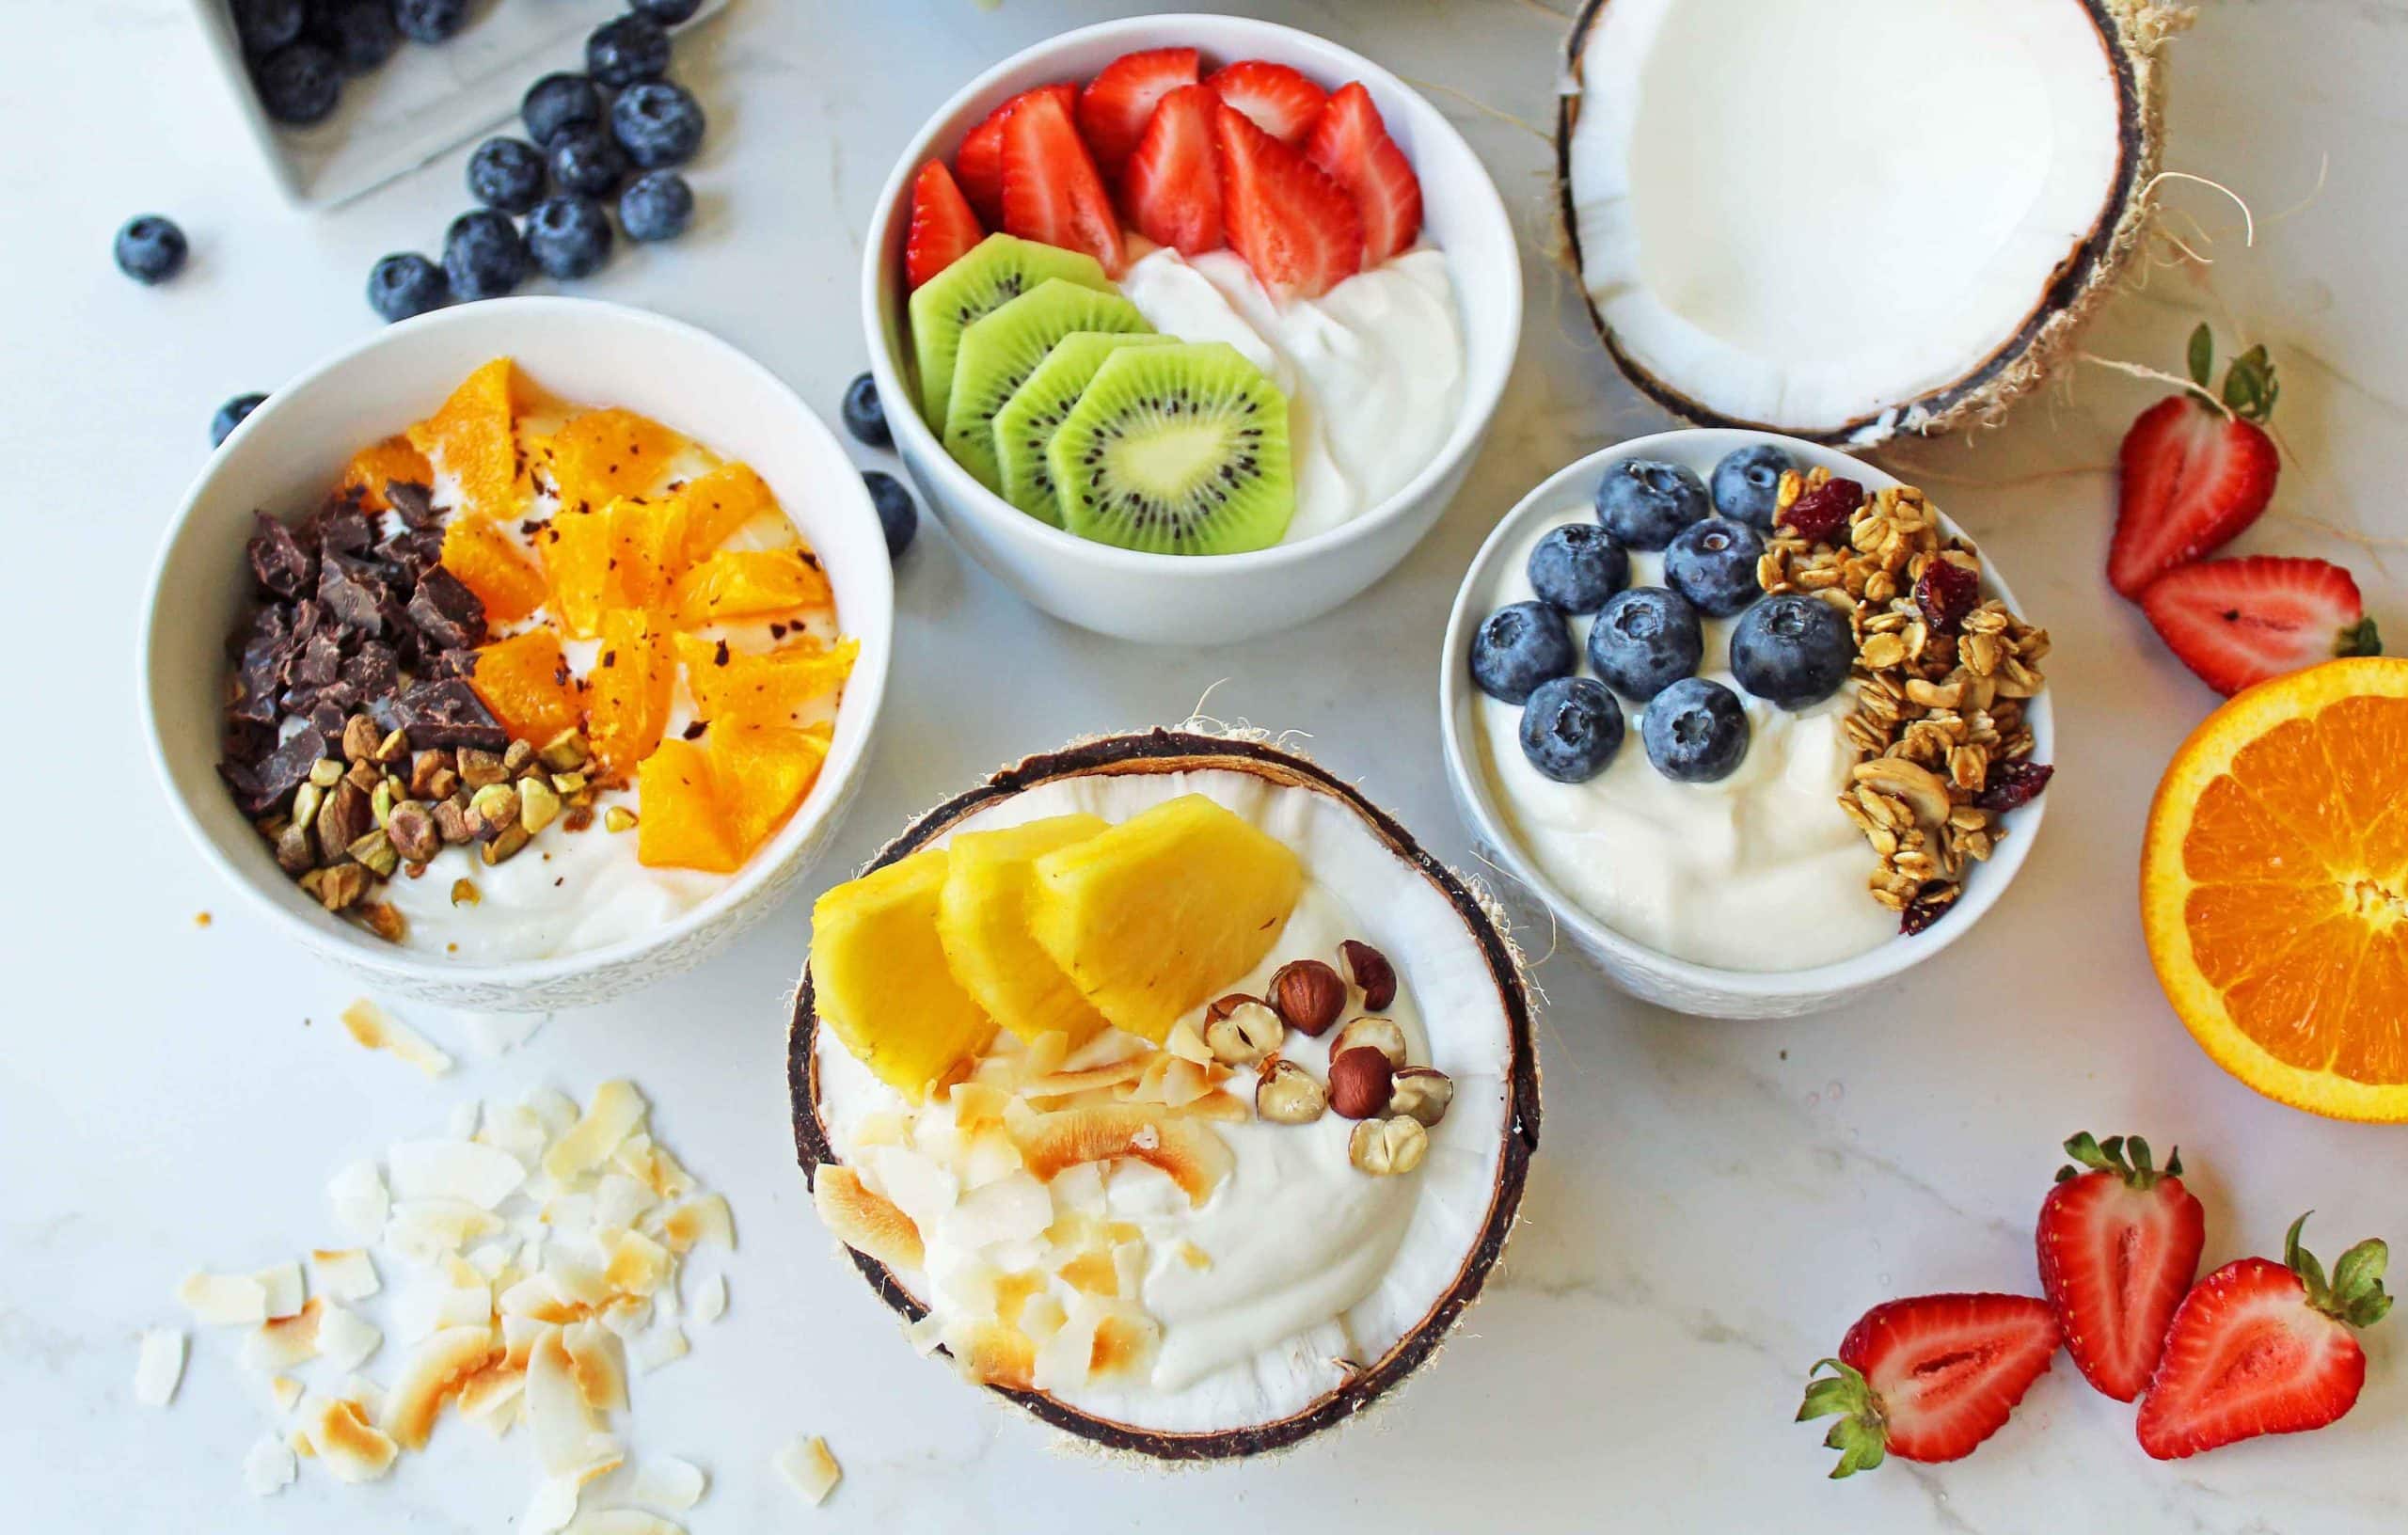 How To Prepare Yogurt At Home? 4 Healthy Yogurt Recipes For Weight Loss